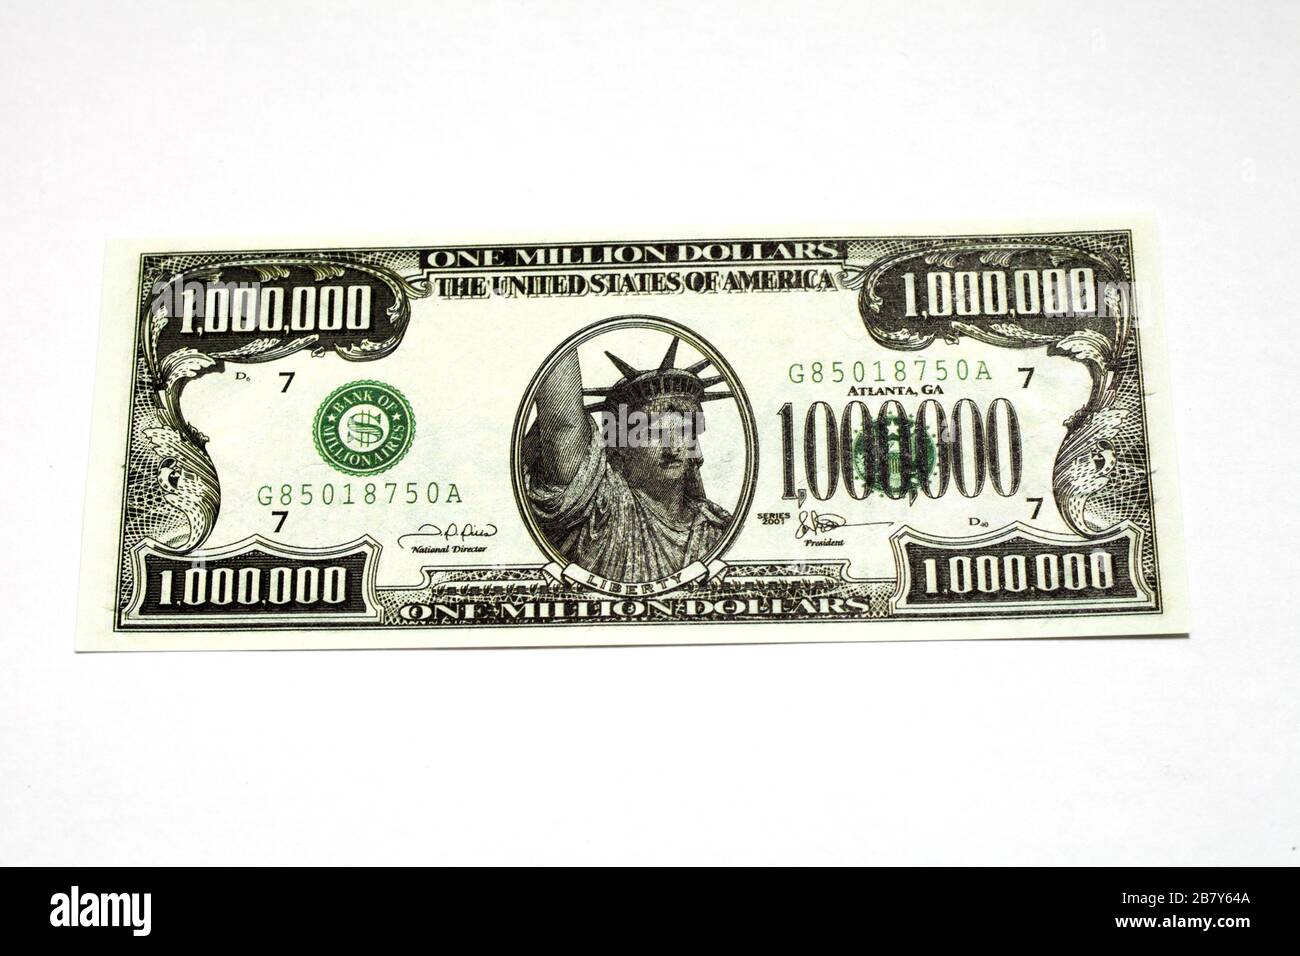 Set of - Realistic Looking 1 Million Dollar Bills 2 